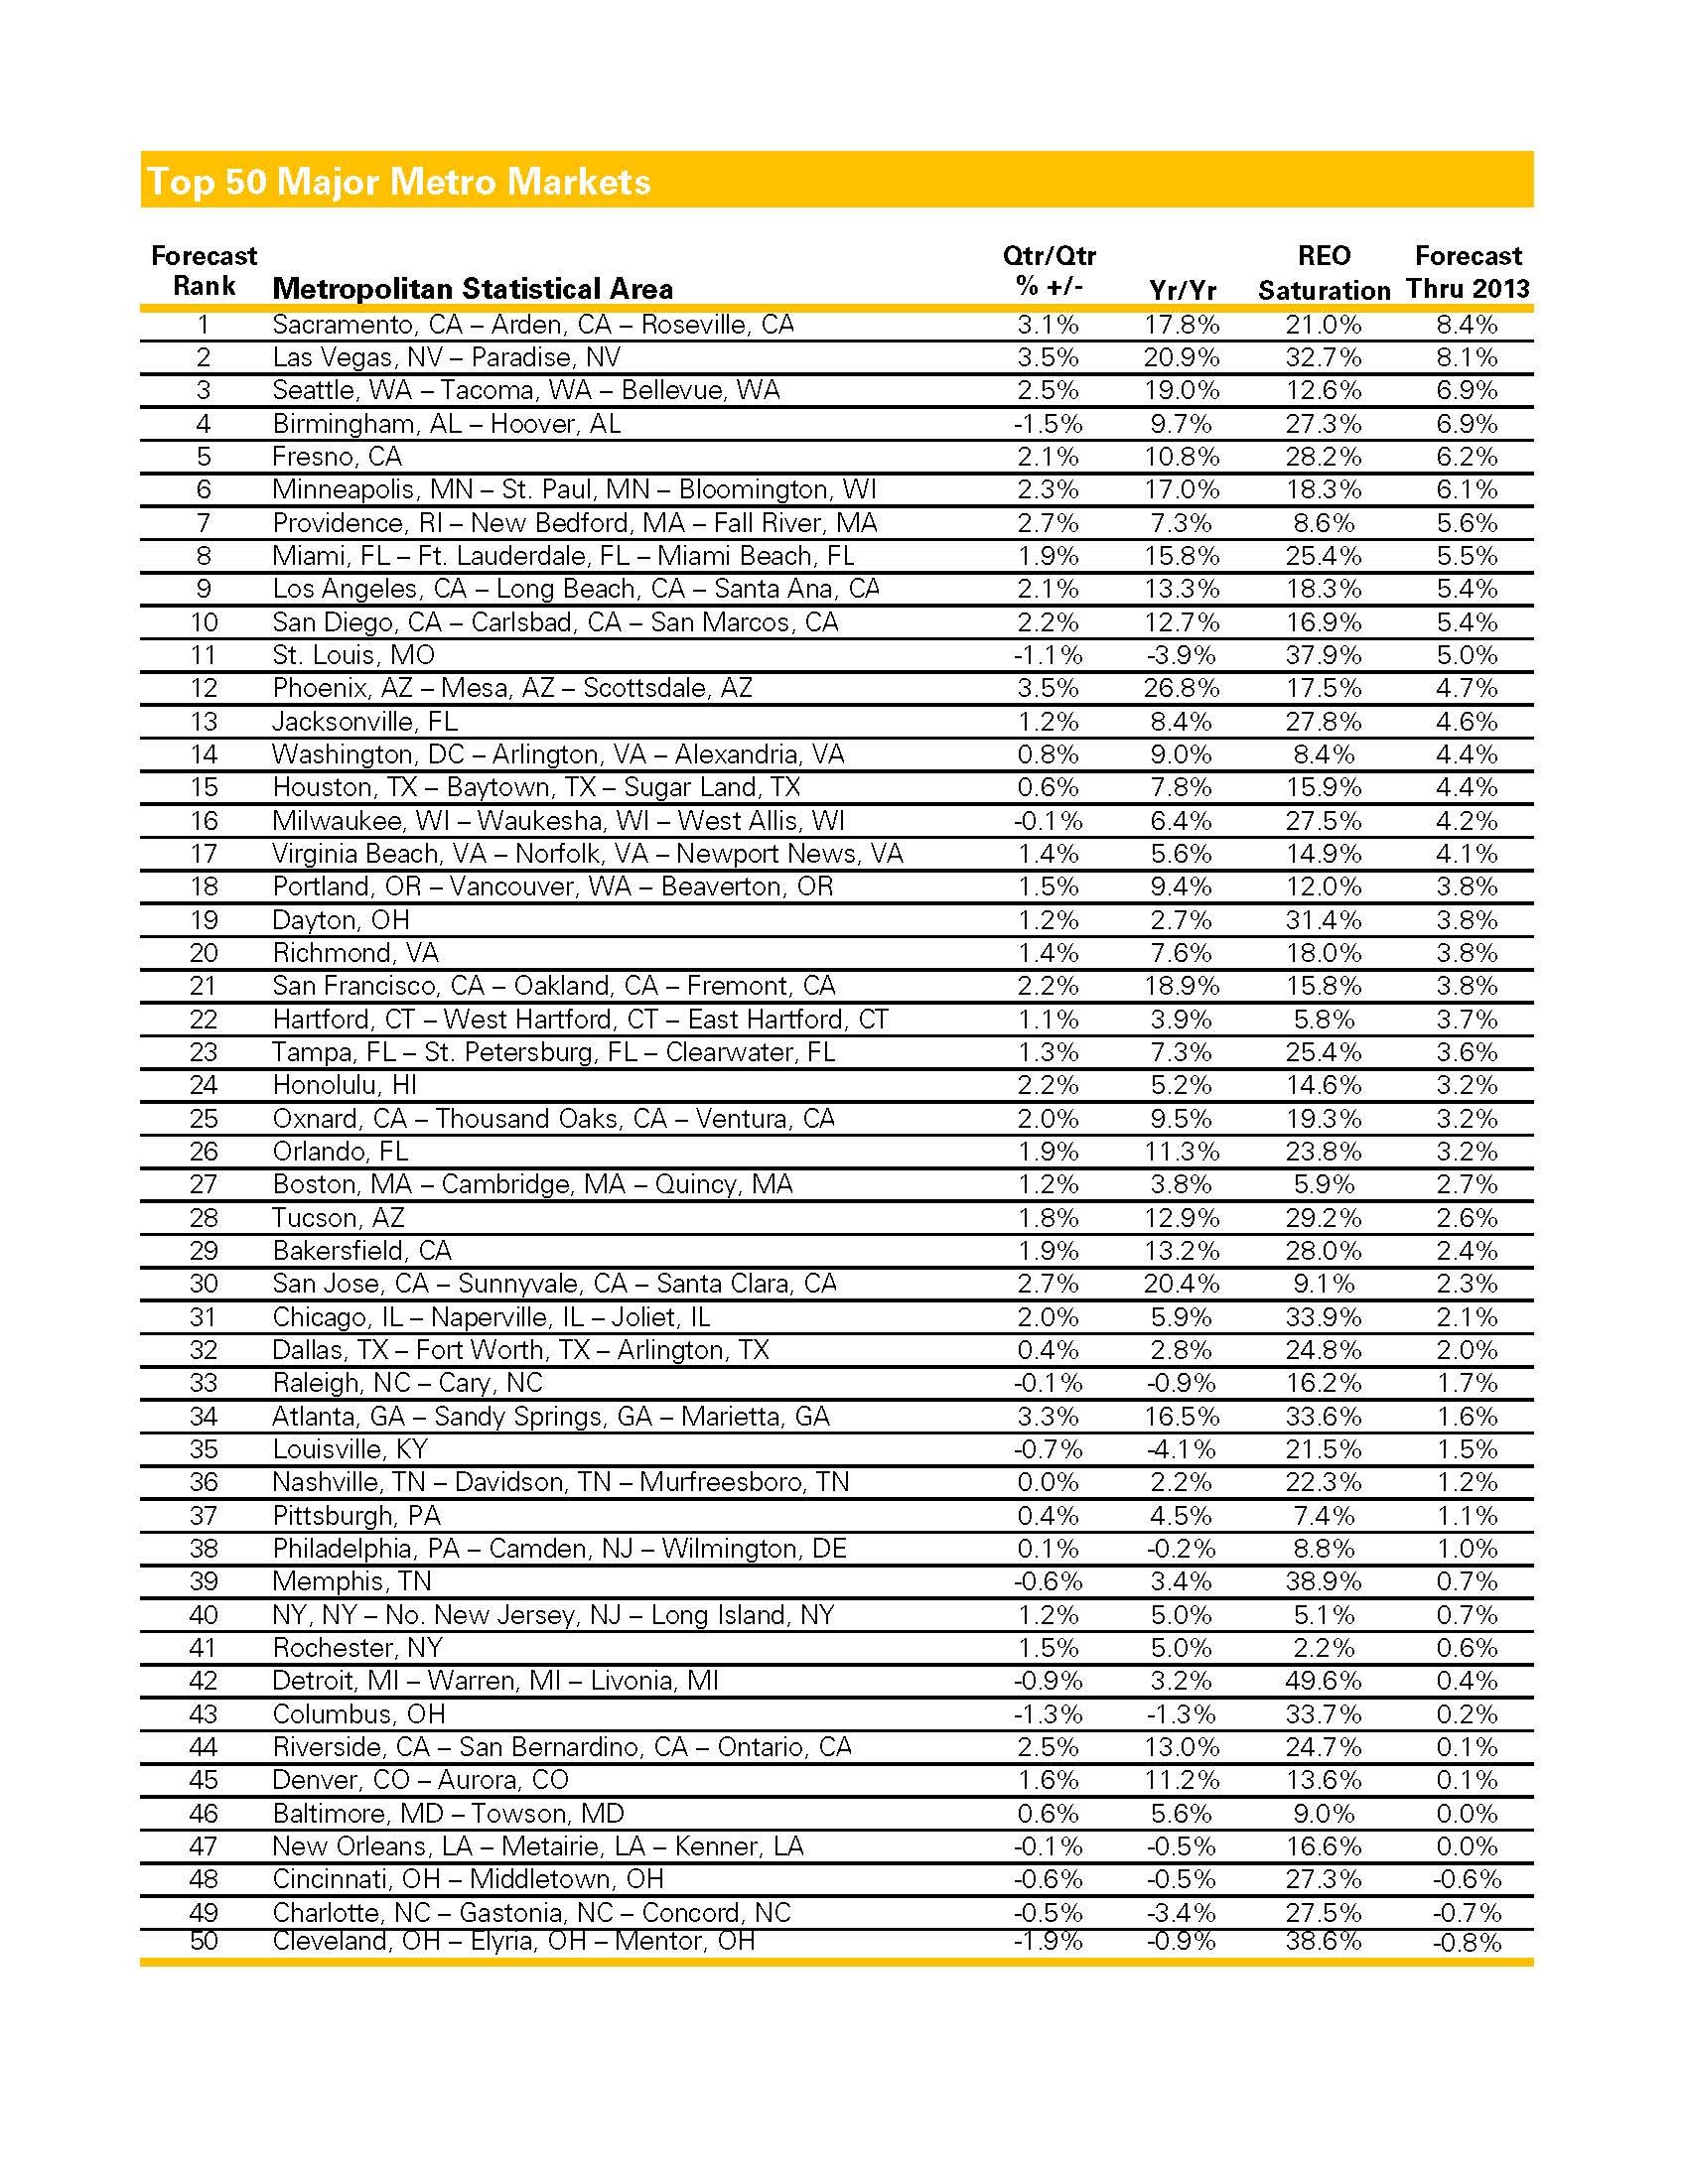 Top 50 Major Metro Markets (Source: Clear Capital) 